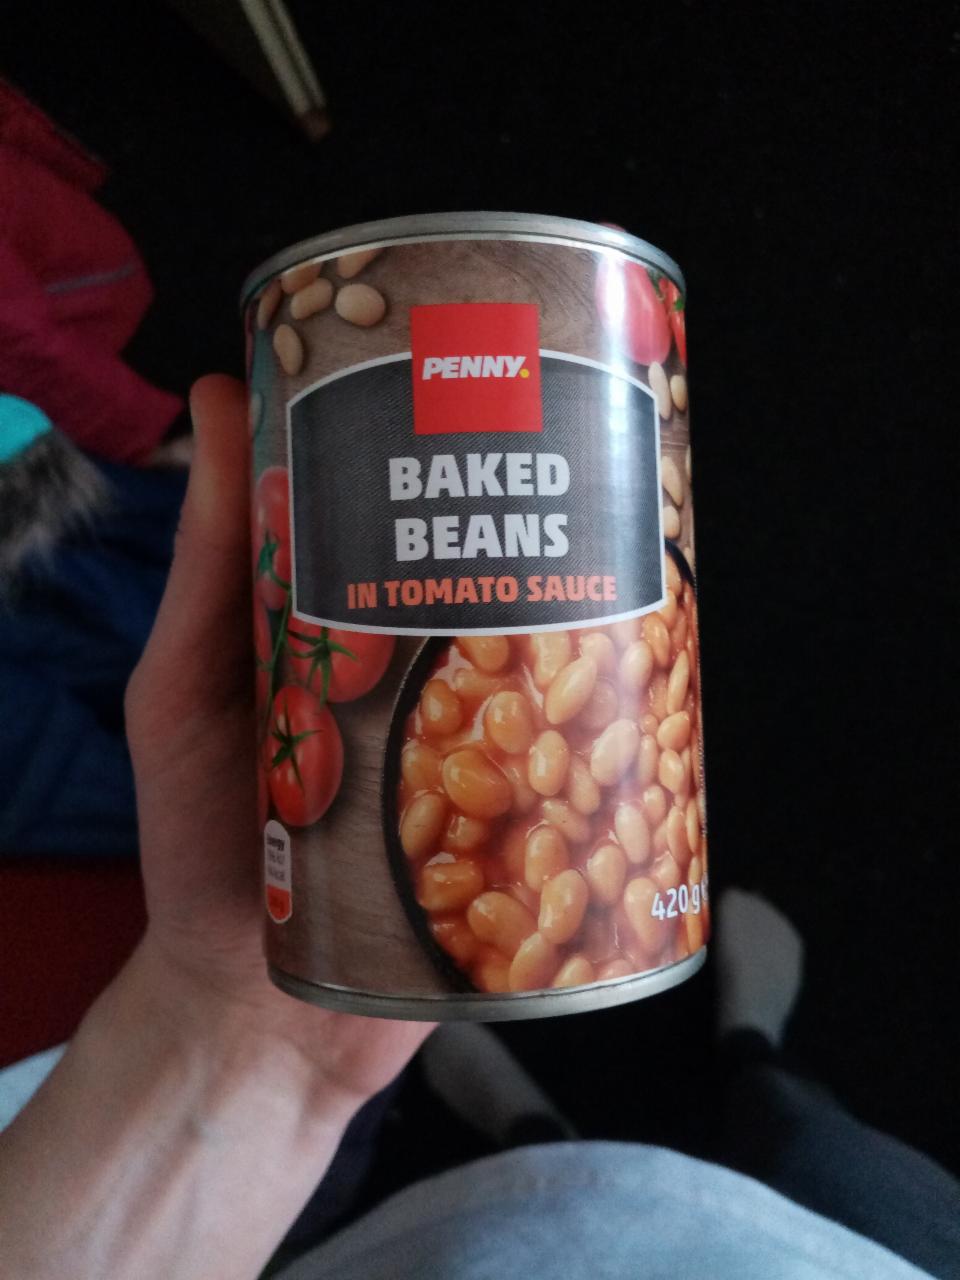 Képek - Baked beans in tomato sauce Penny